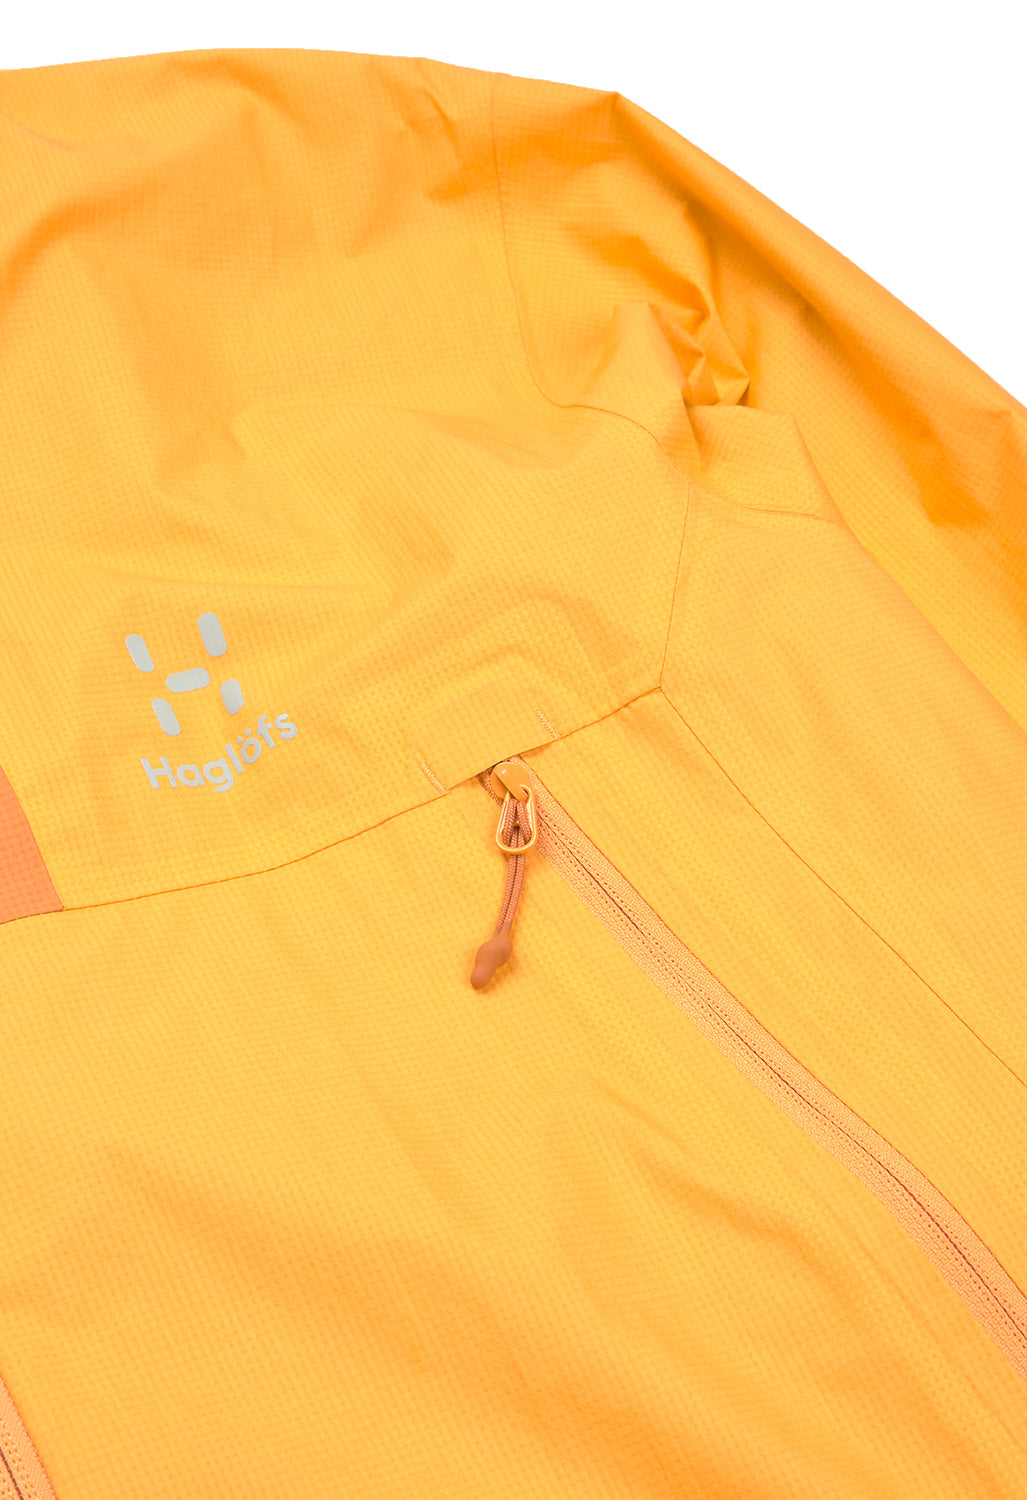 Haglofs Men's L.I.M Proof Jacket - Sunny Yellow / Desert Yellow